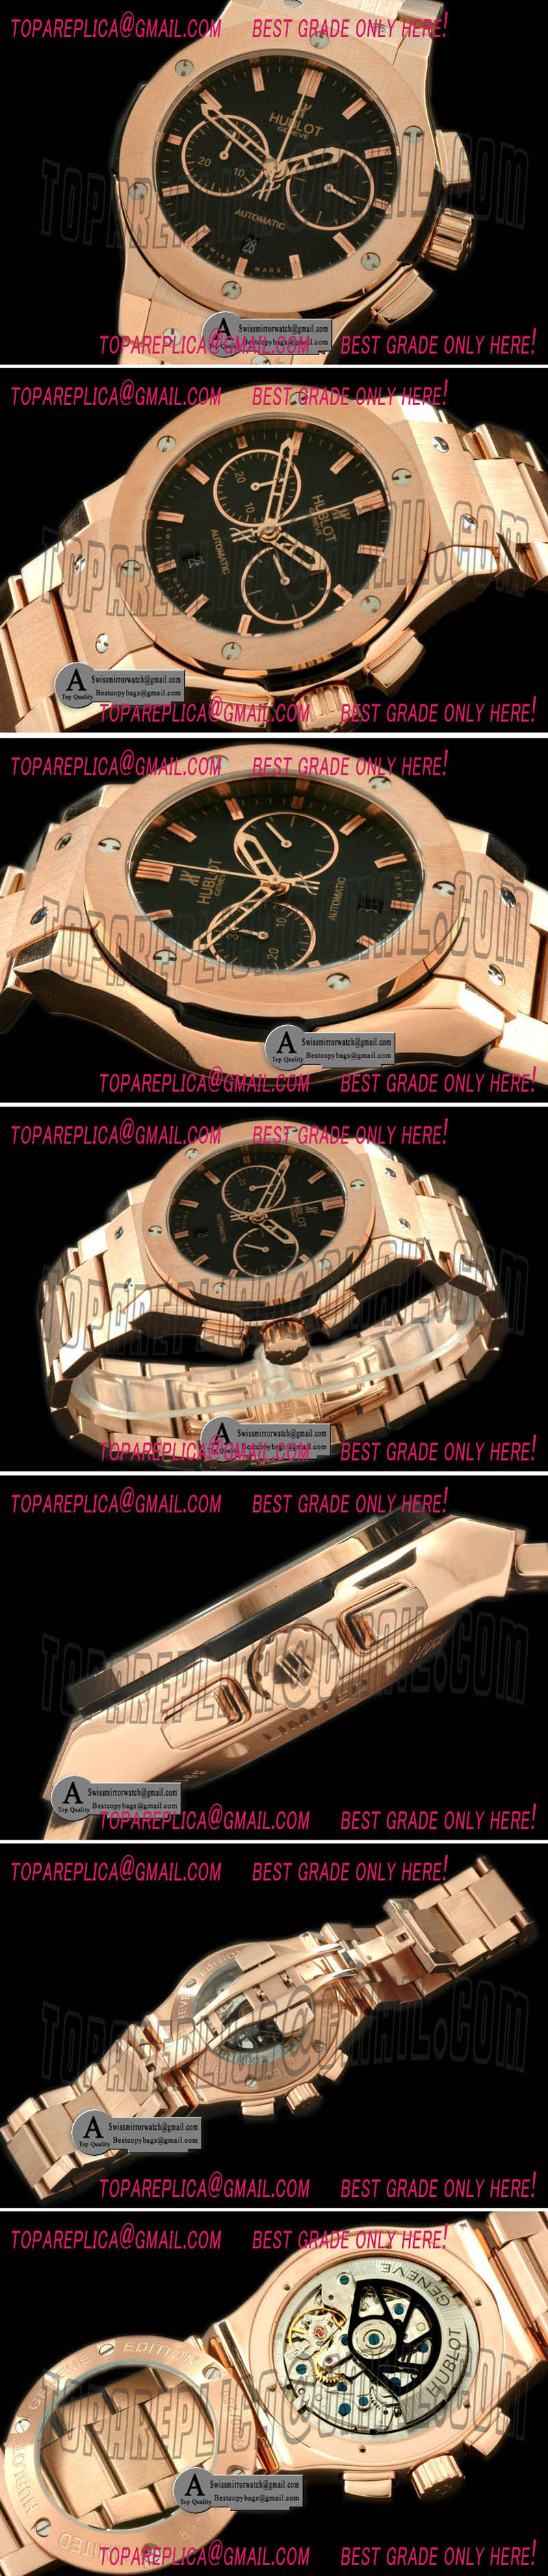 Hublot Classic Fusion 521.OX.1180.OX Chrono V2 Rose Gold Rose Gold Black A 7750 Replica Watches